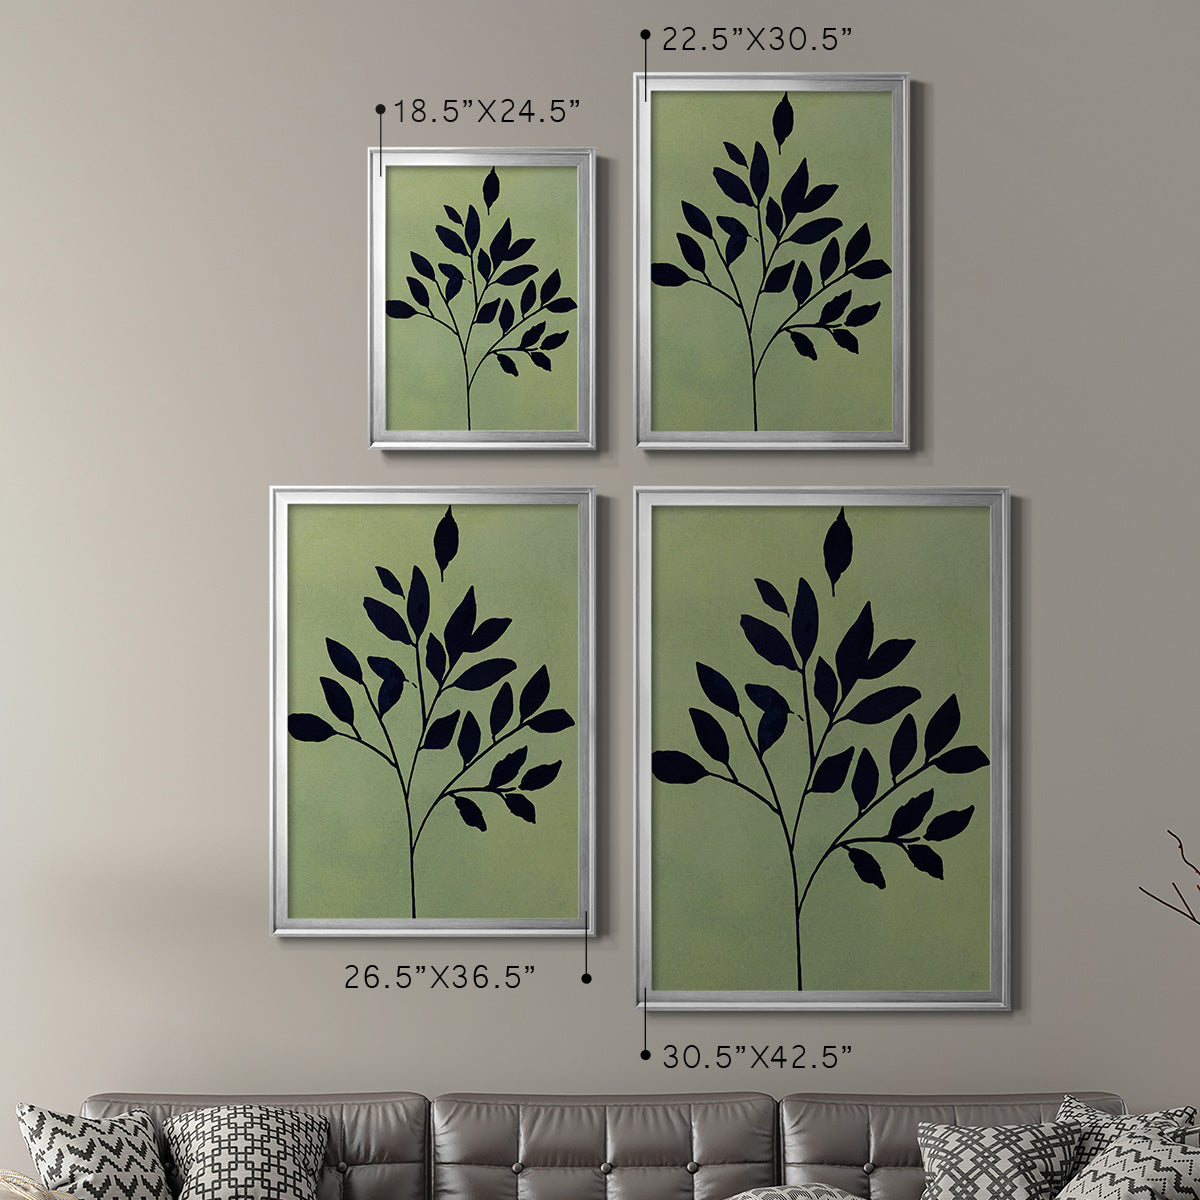 Earthly Botanical I Premium Framed Print - Ready to Hang